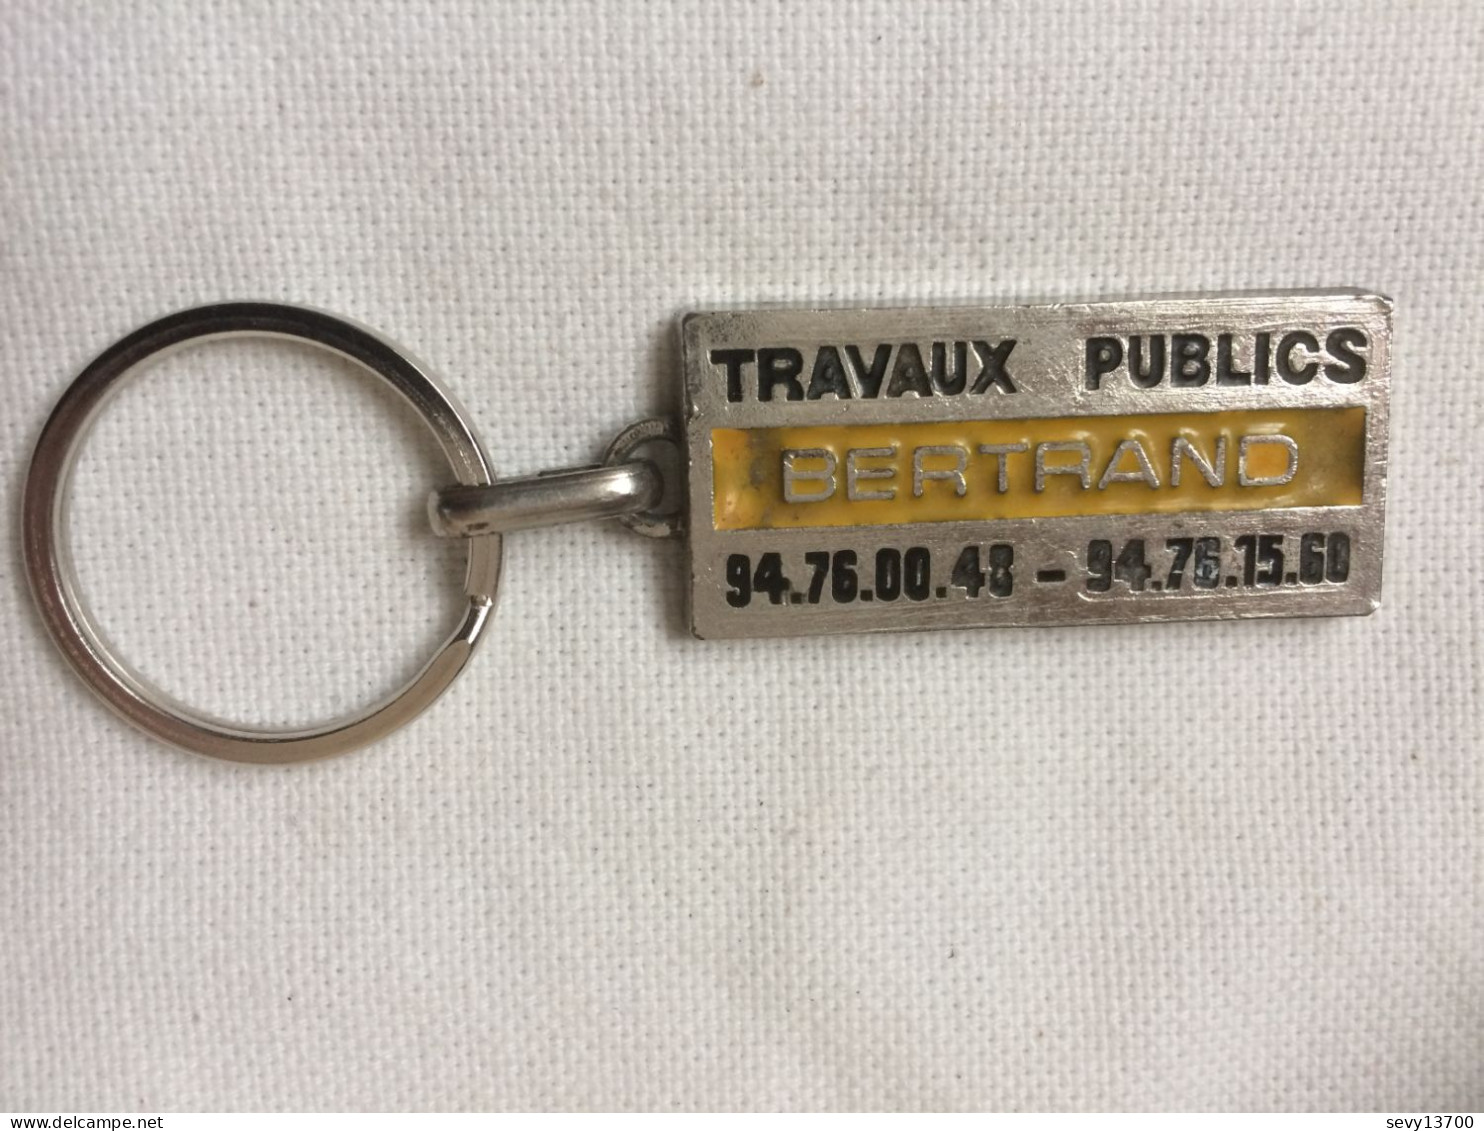 Porte Clef Travaux Publics Bertrand - Key-rings